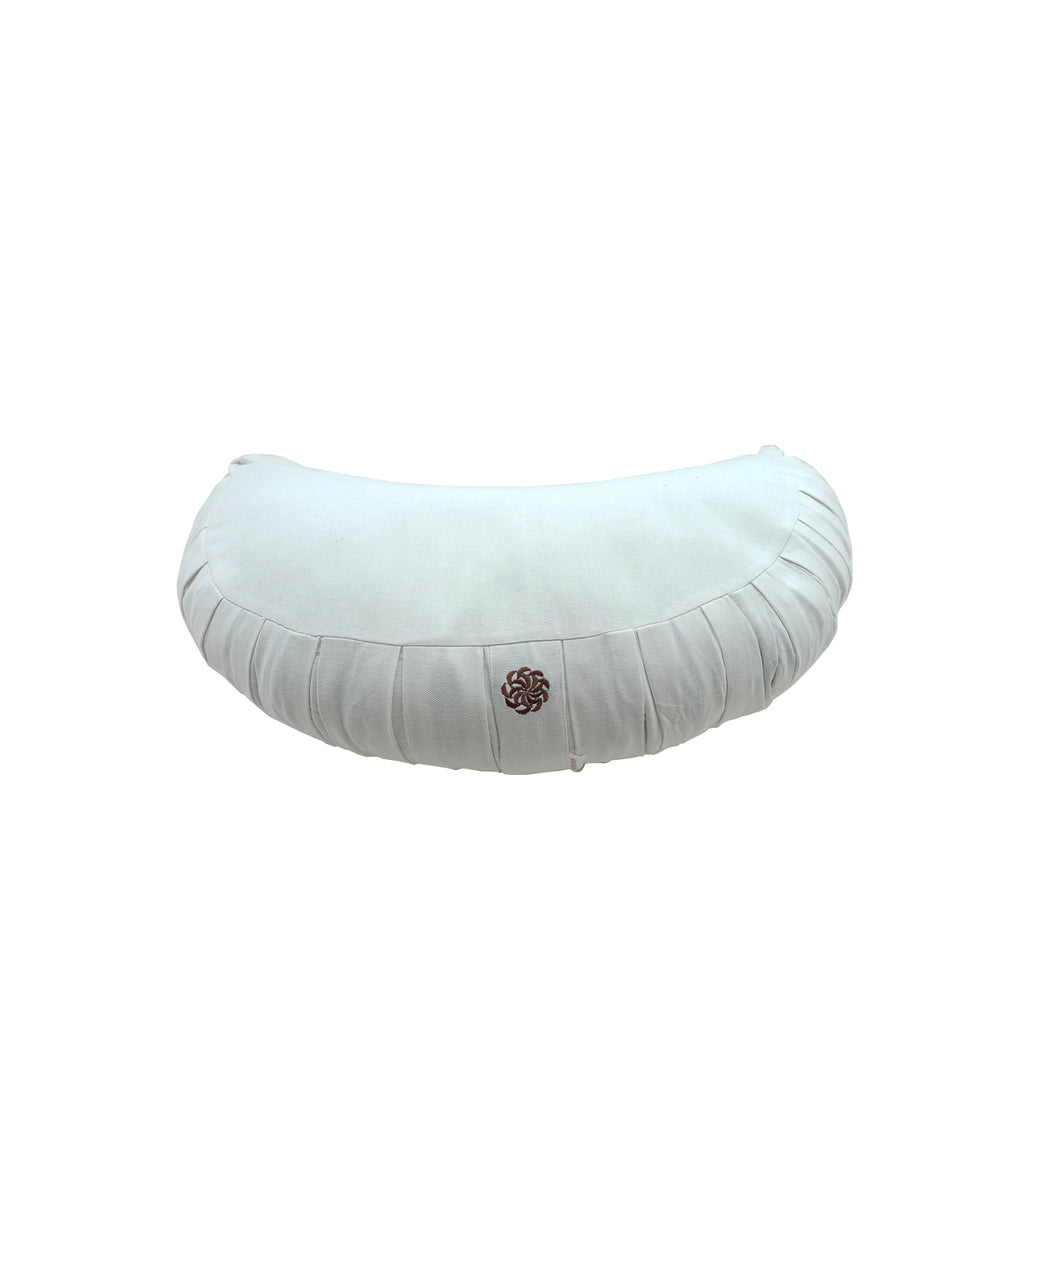 Meditation Cushion Crescent Shaped Zafu Filled With Buckwheat Hulls - Solid White